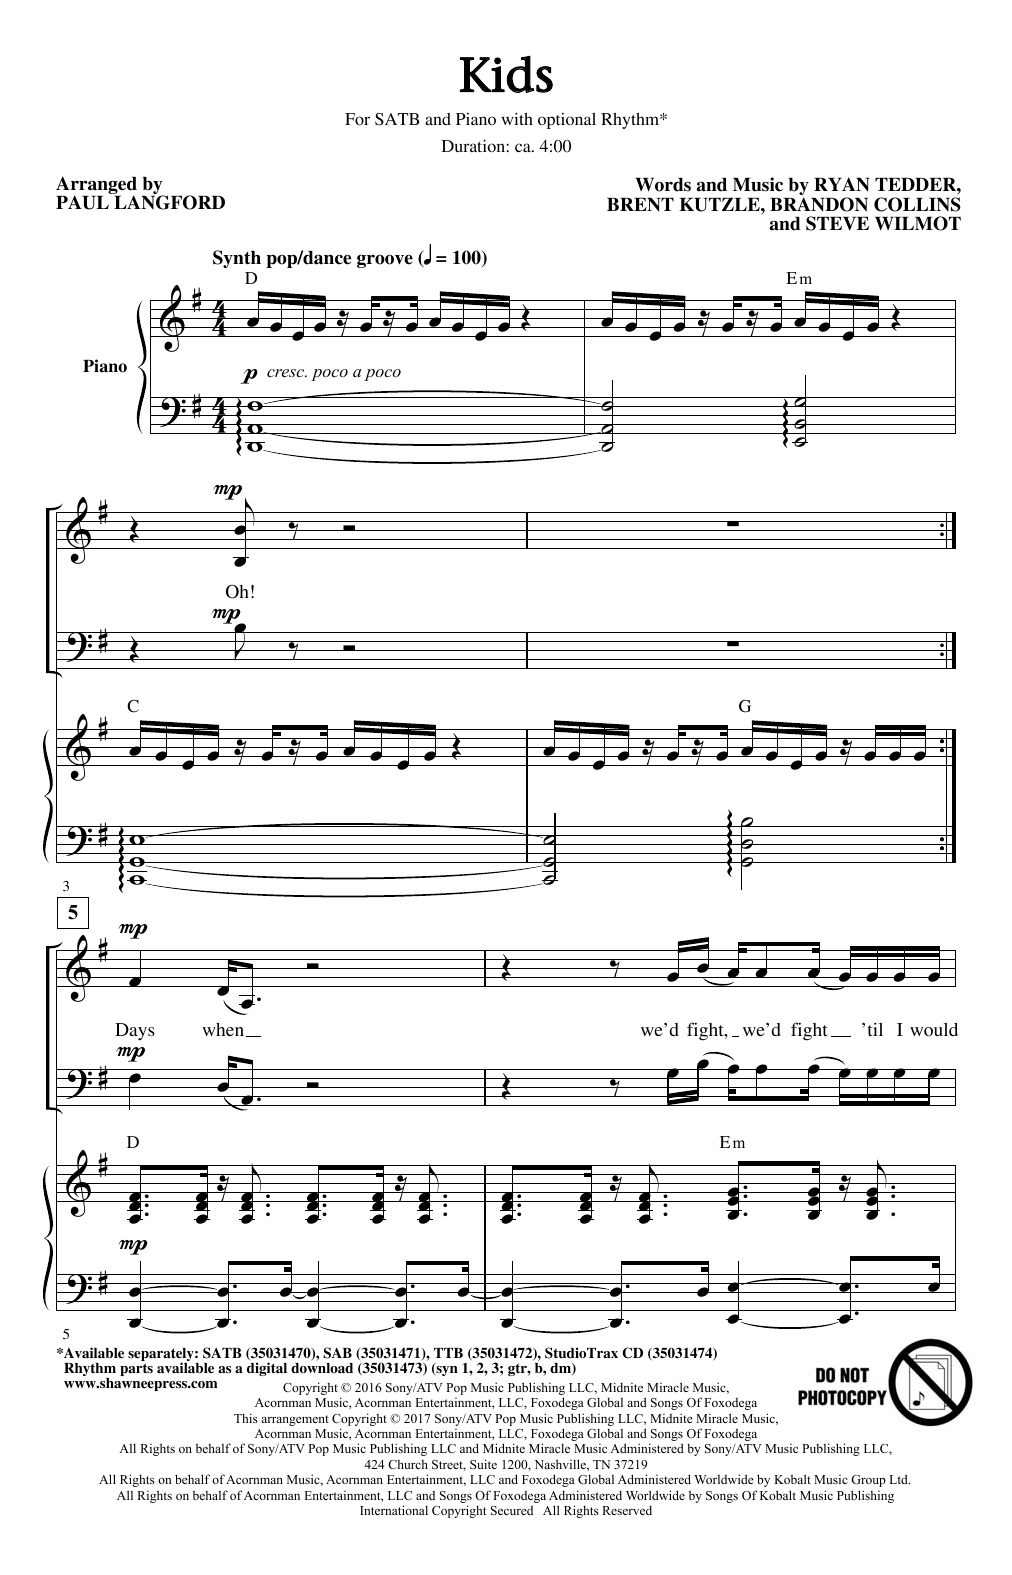 OneRepublic Kids (arr. Paul Langford) Sheet Music Notes & Chords for SATB - Download or Print PDF